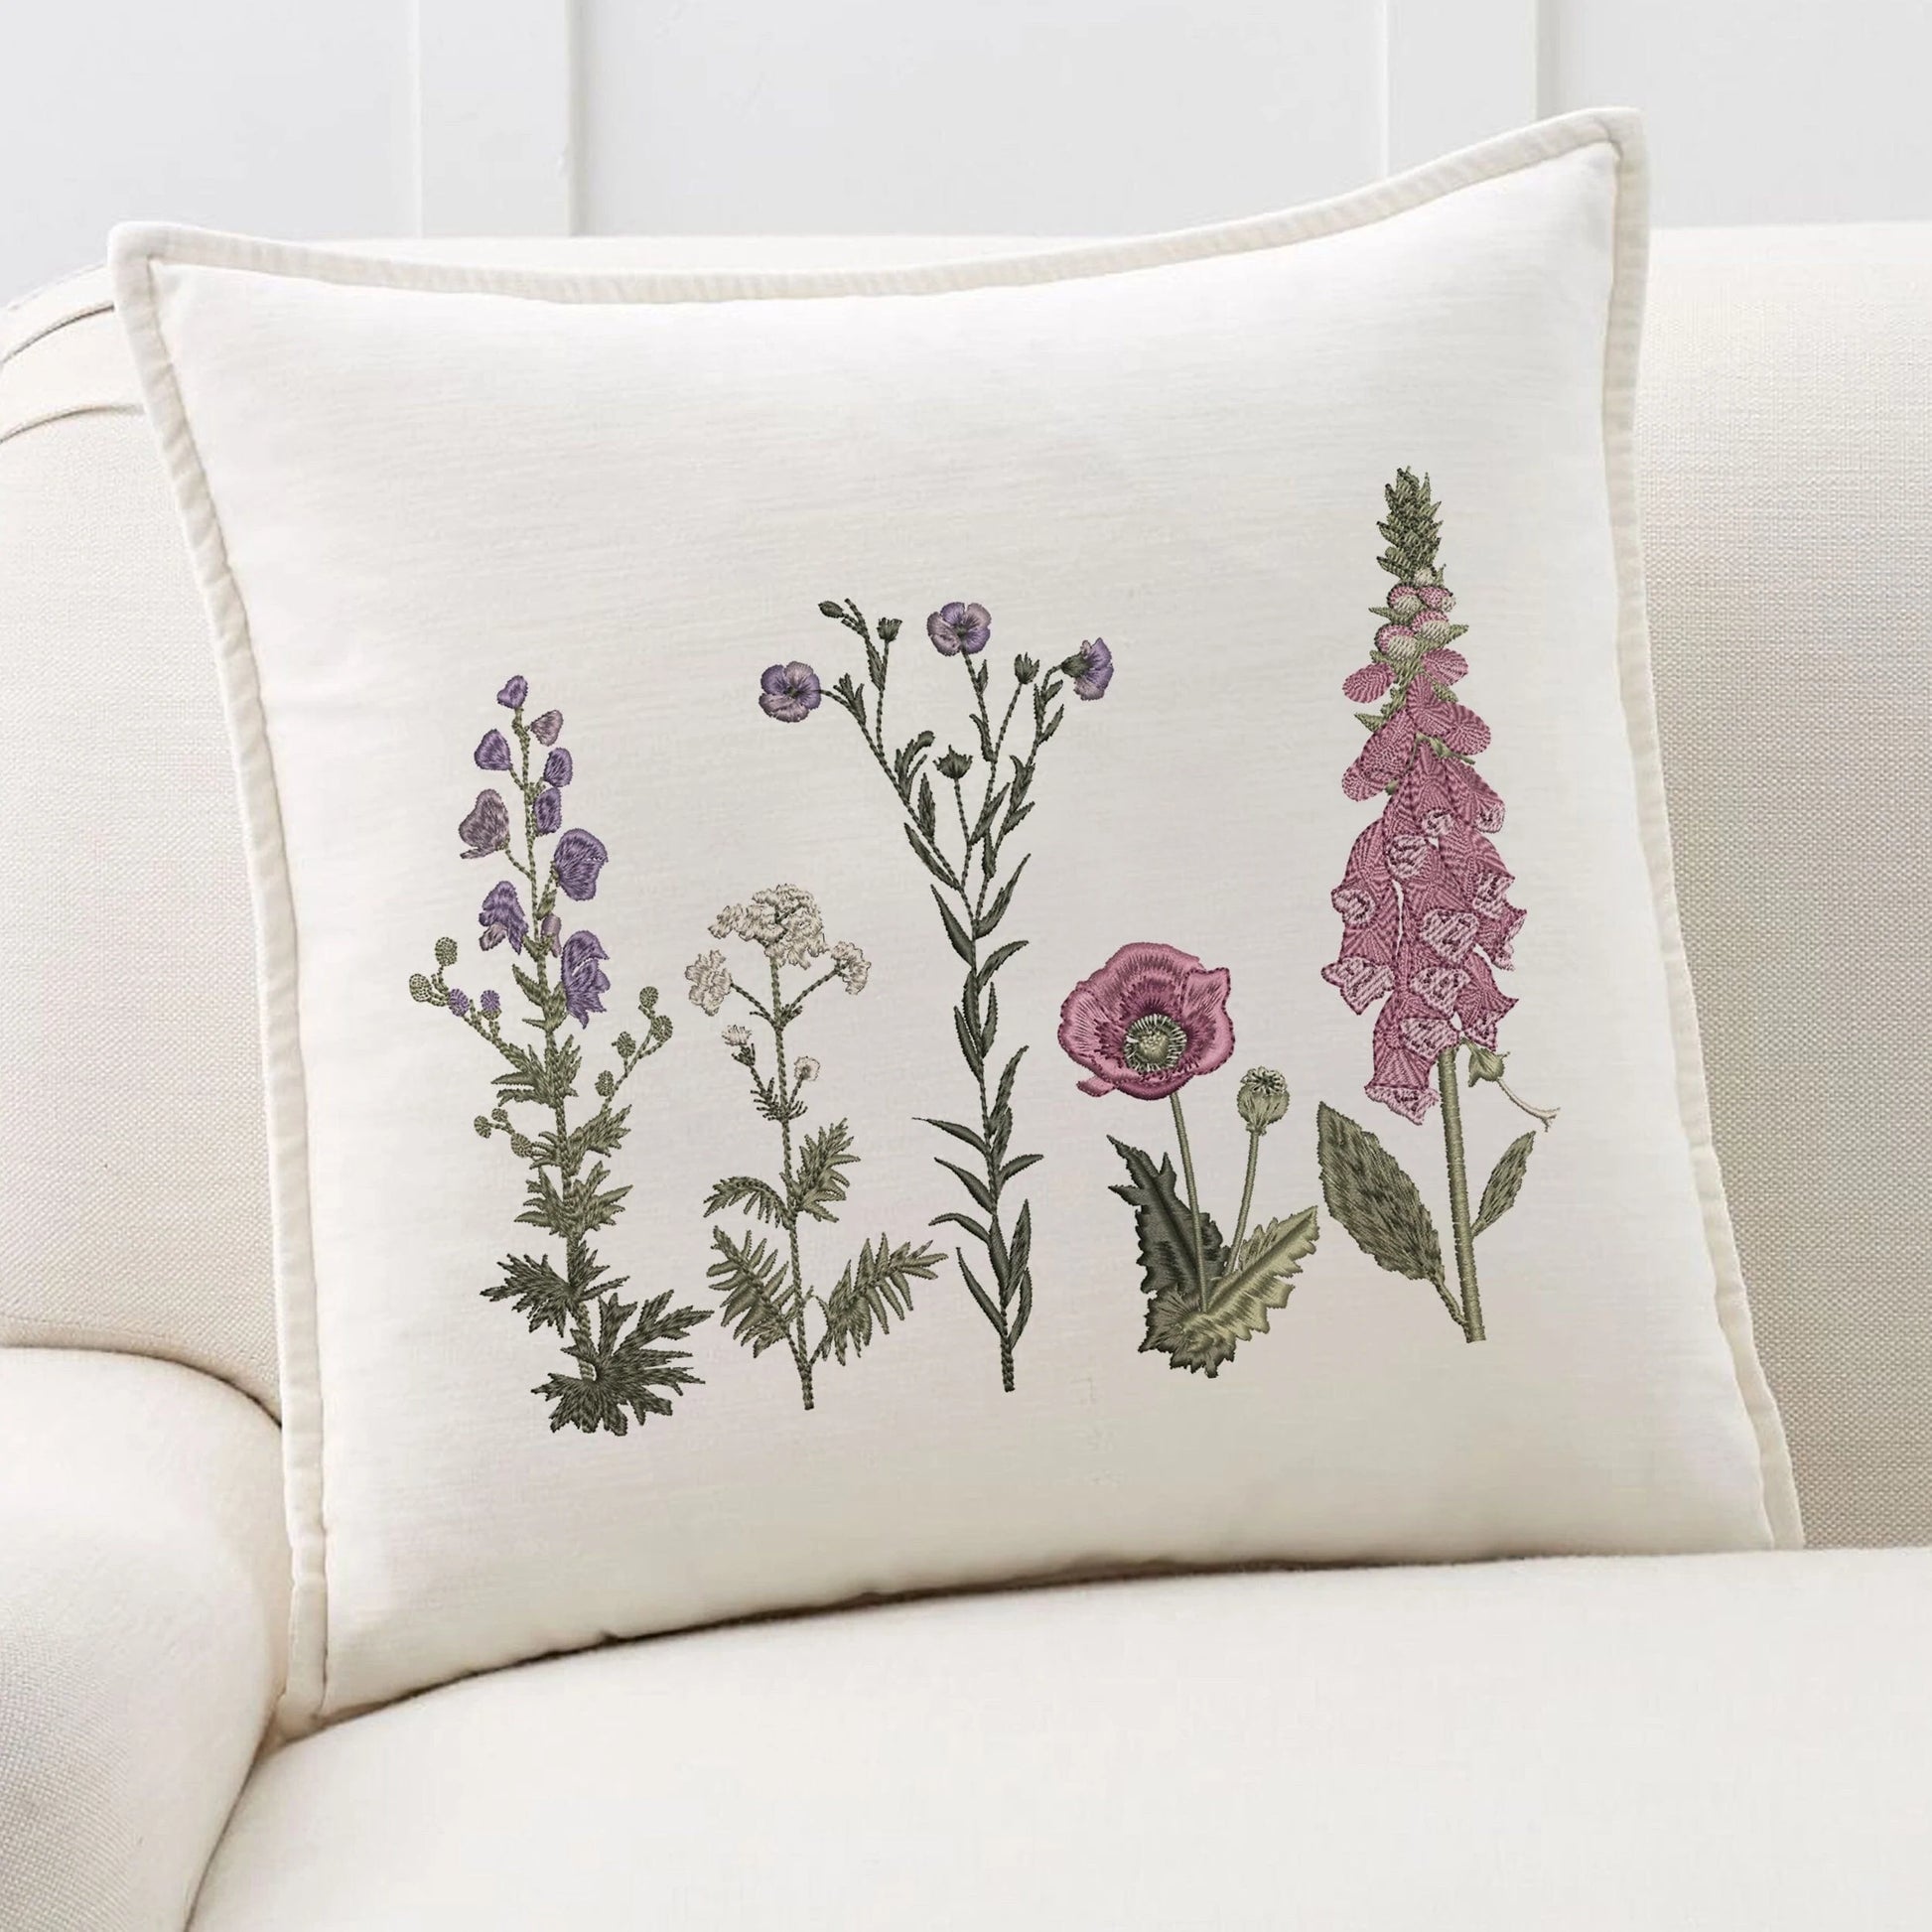 Fairy Garden Flowers Machine Embroidery Design on pillow